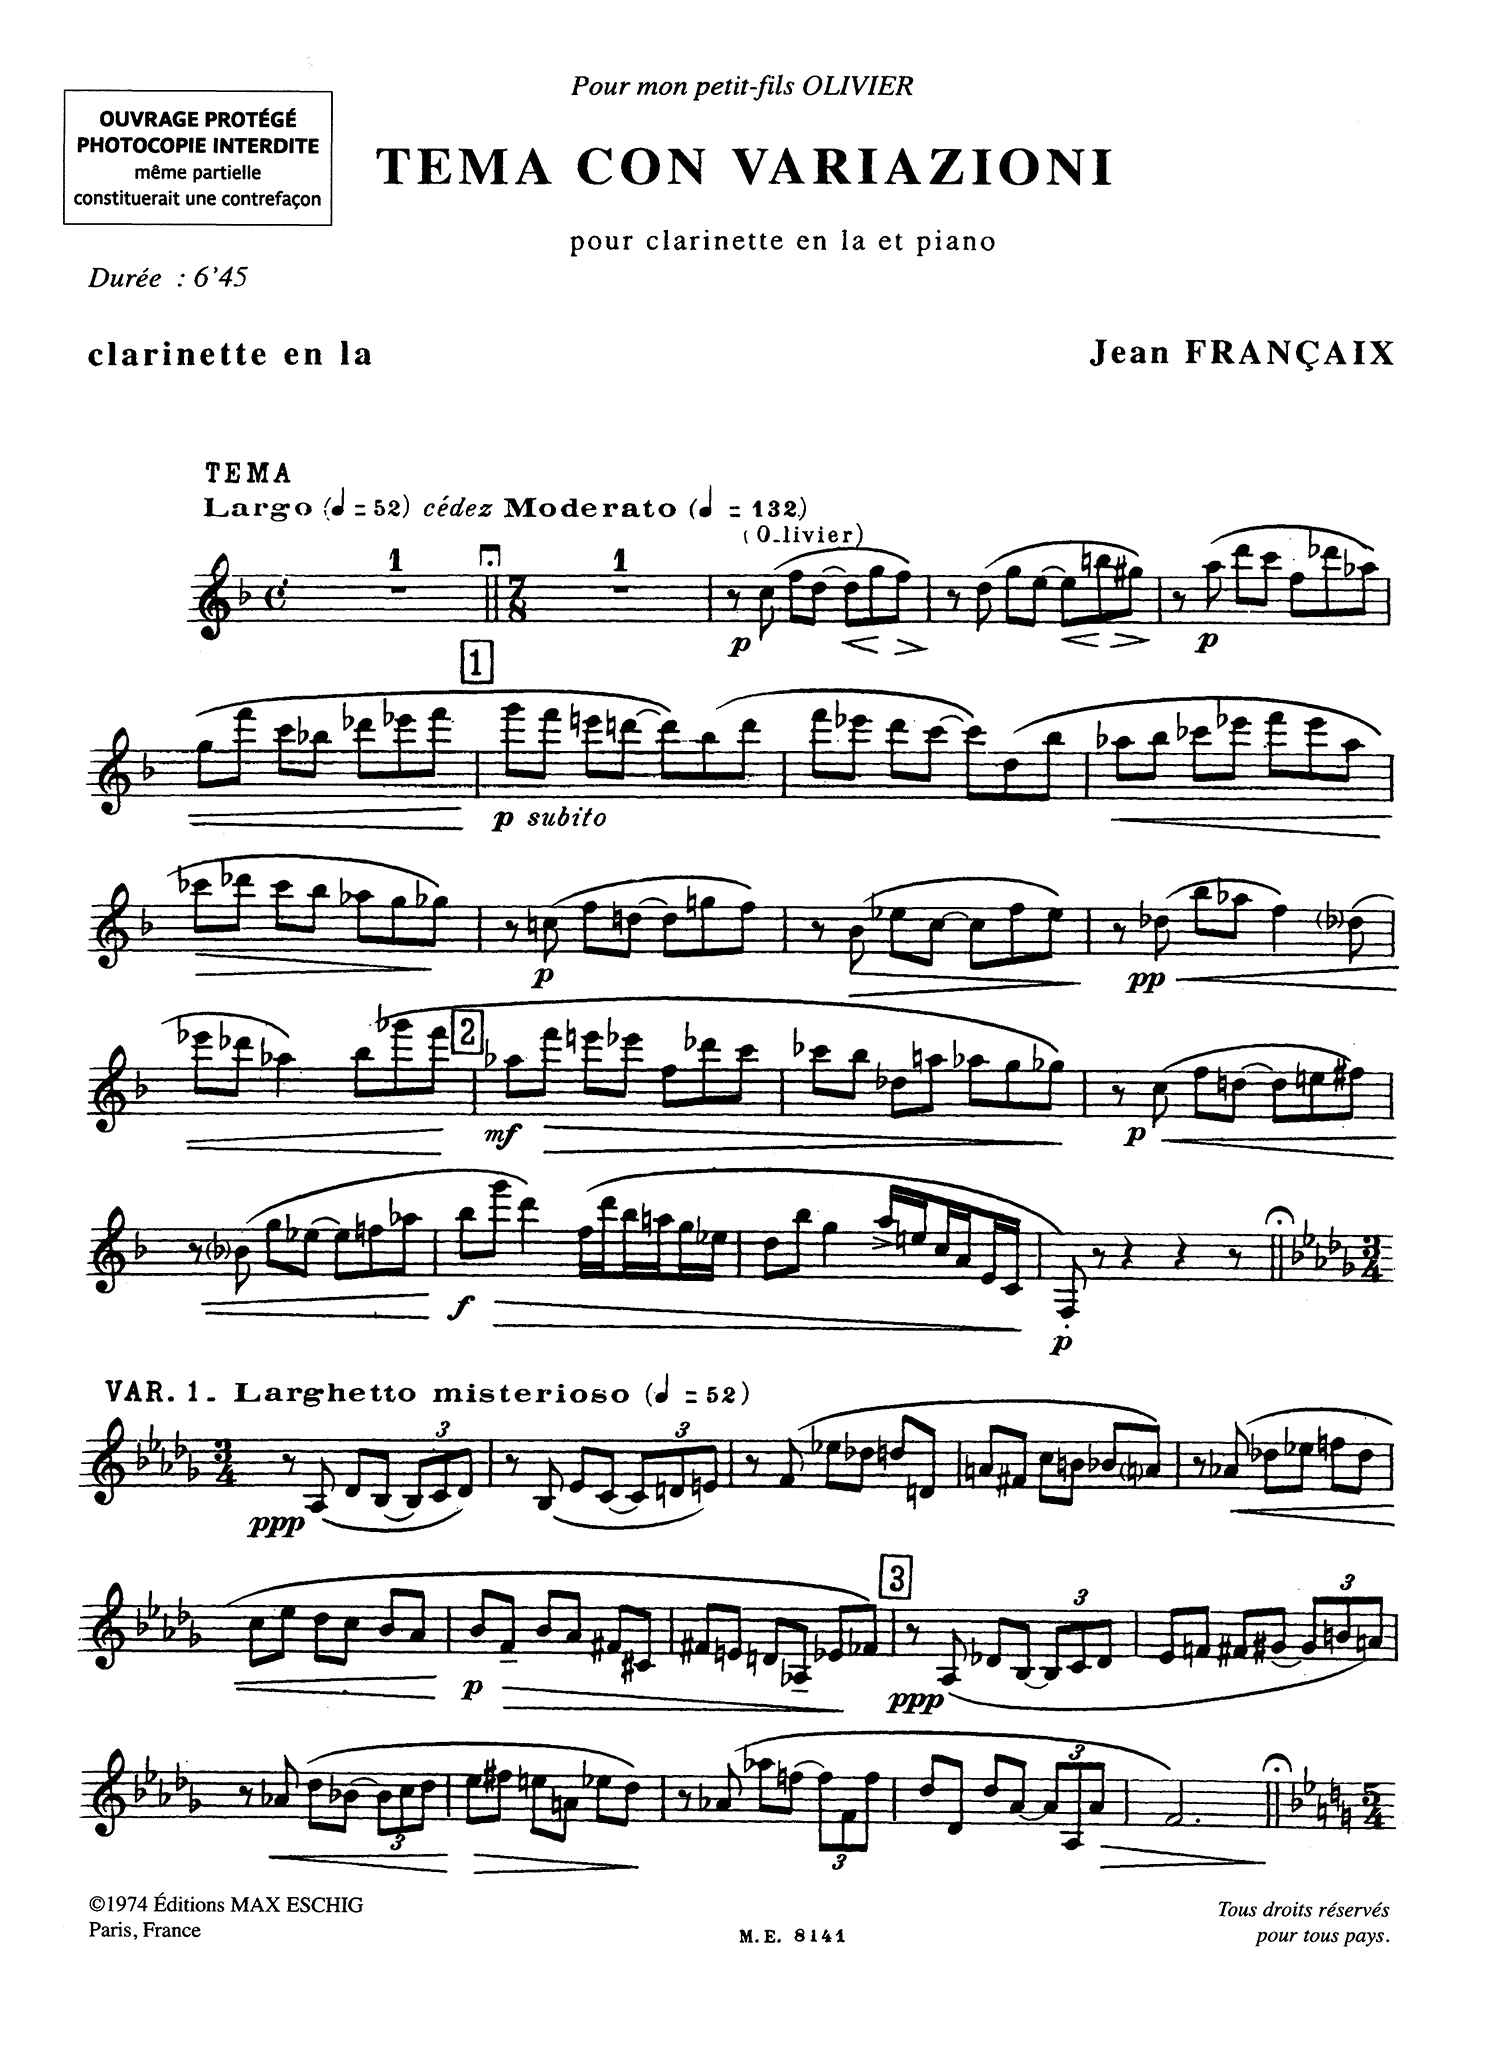 Françaix Tema con variazioni Clarinet part